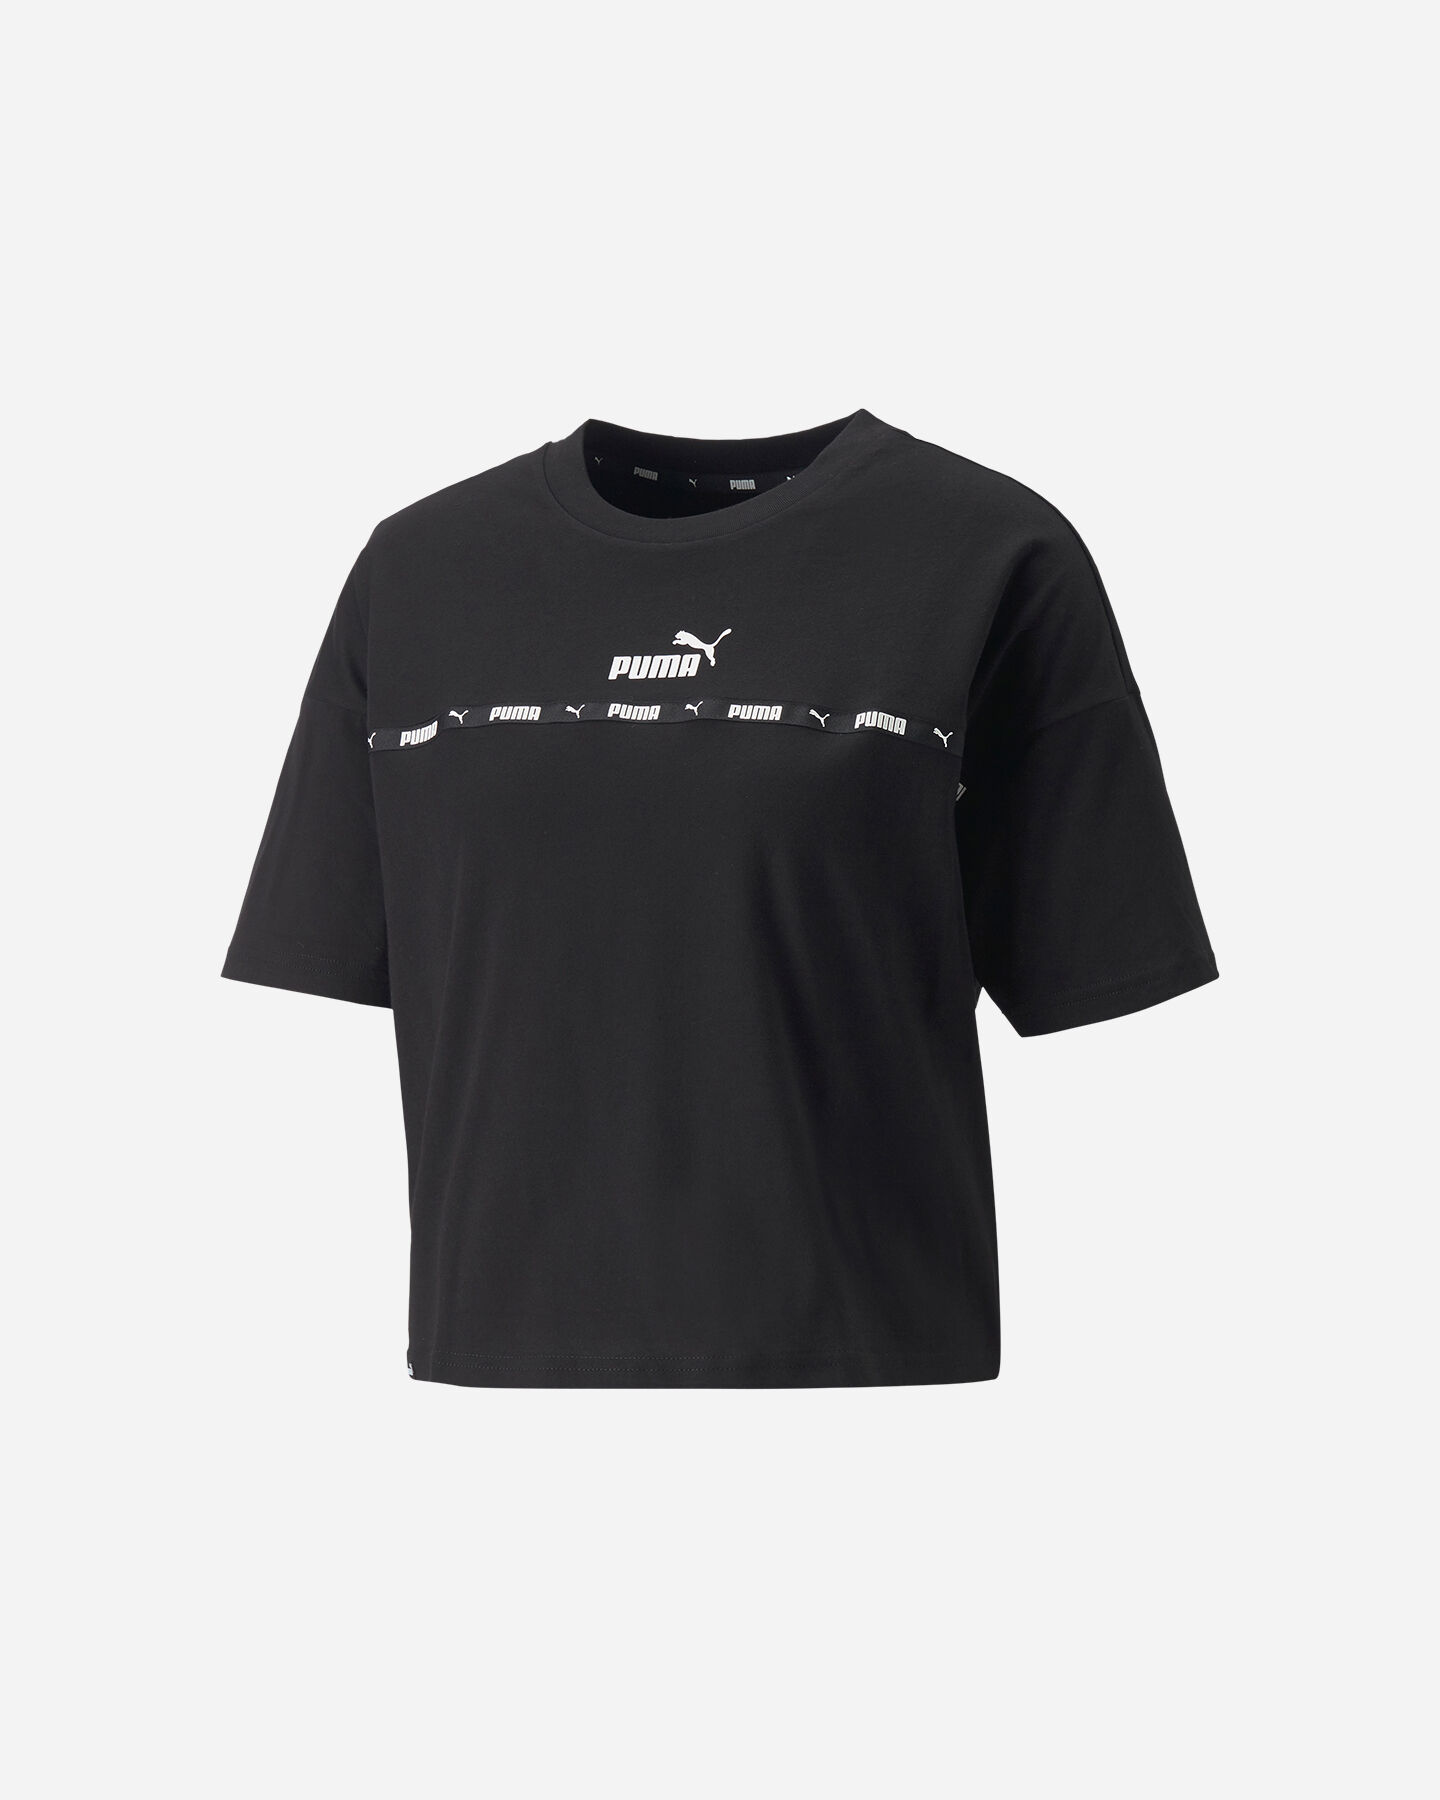  T-Shirt PUMA CROP TAPE LOGO W S5452281|35|S scatto 0